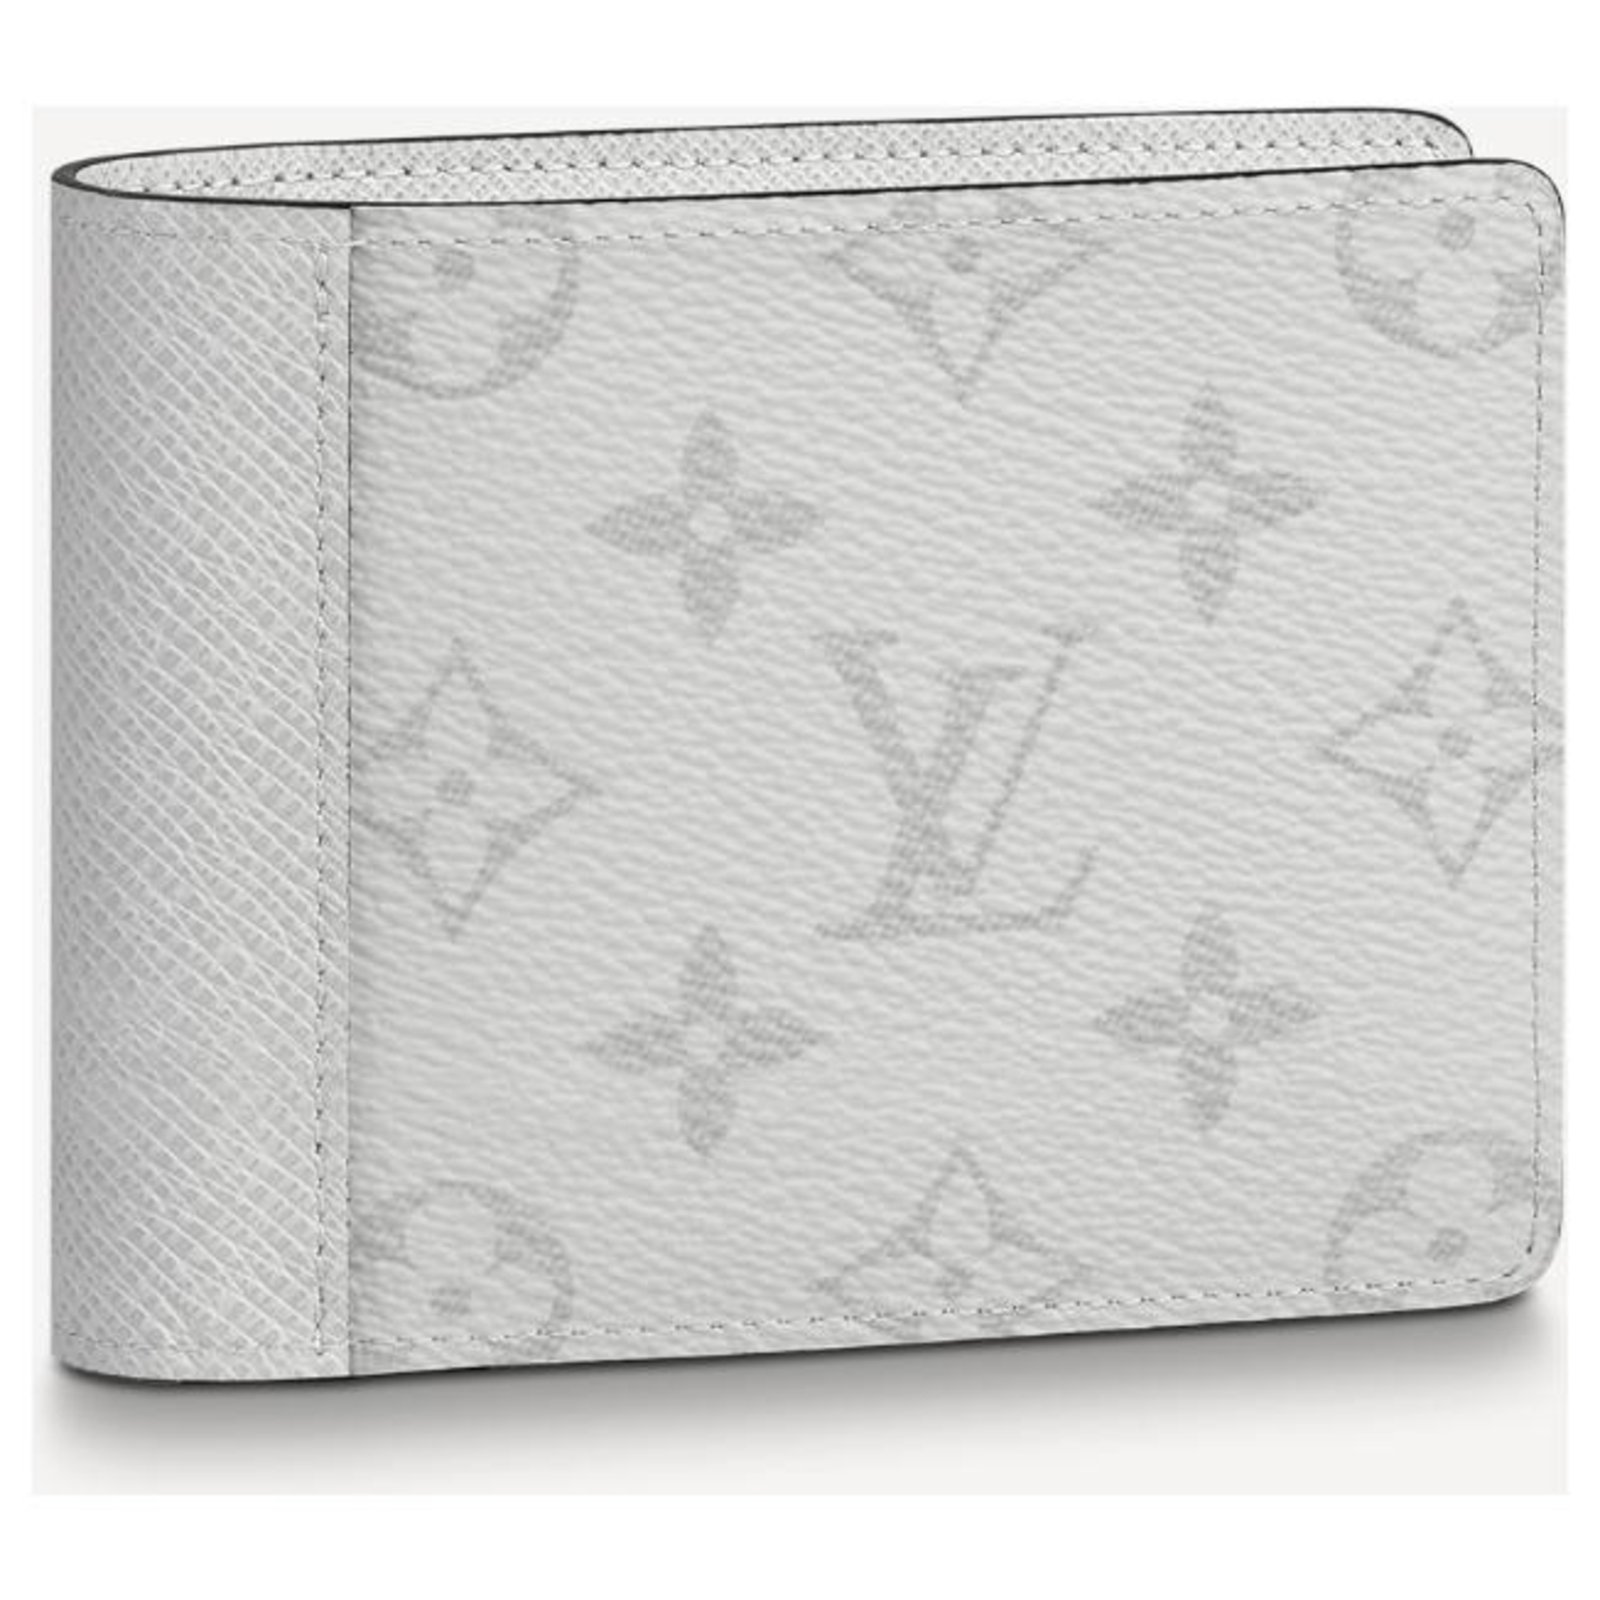 Cartera Louis Vuitton Billetera Larga Blanca Mujer unisex Auténtica Usada  E1141